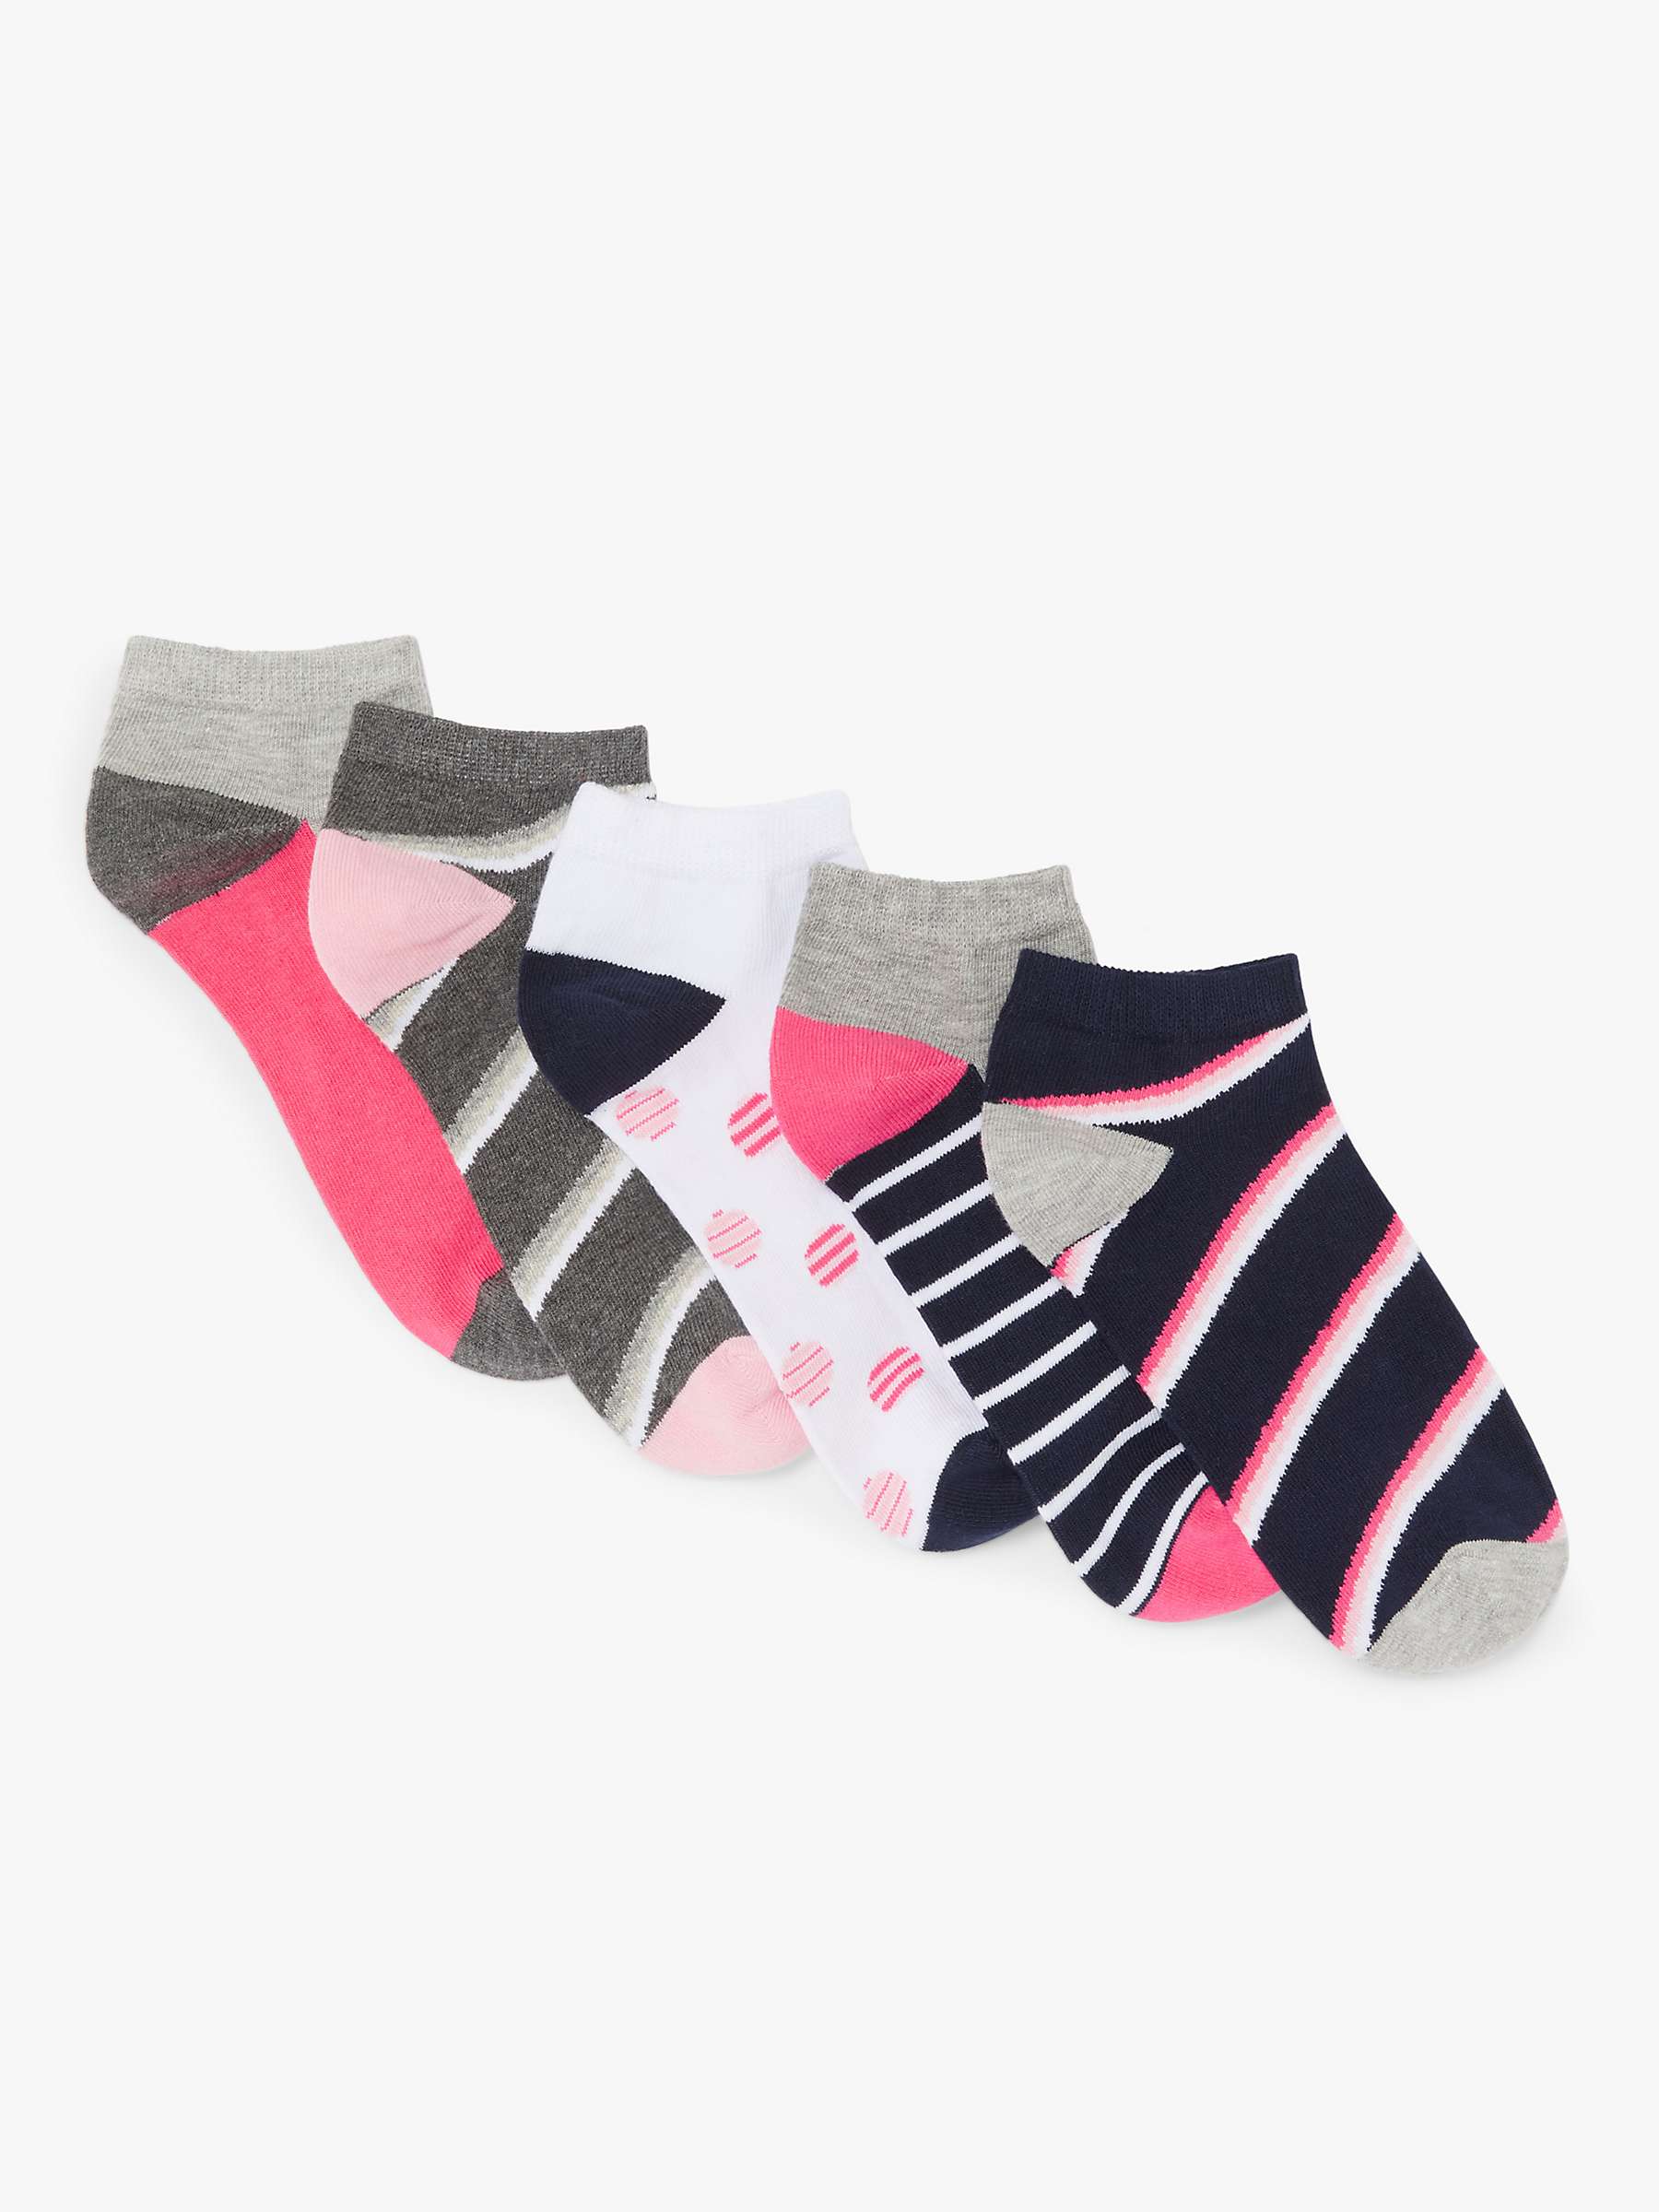 John Lewis & Partners Women's Stripes and Spots Trainer Socks, Set of 5 ...